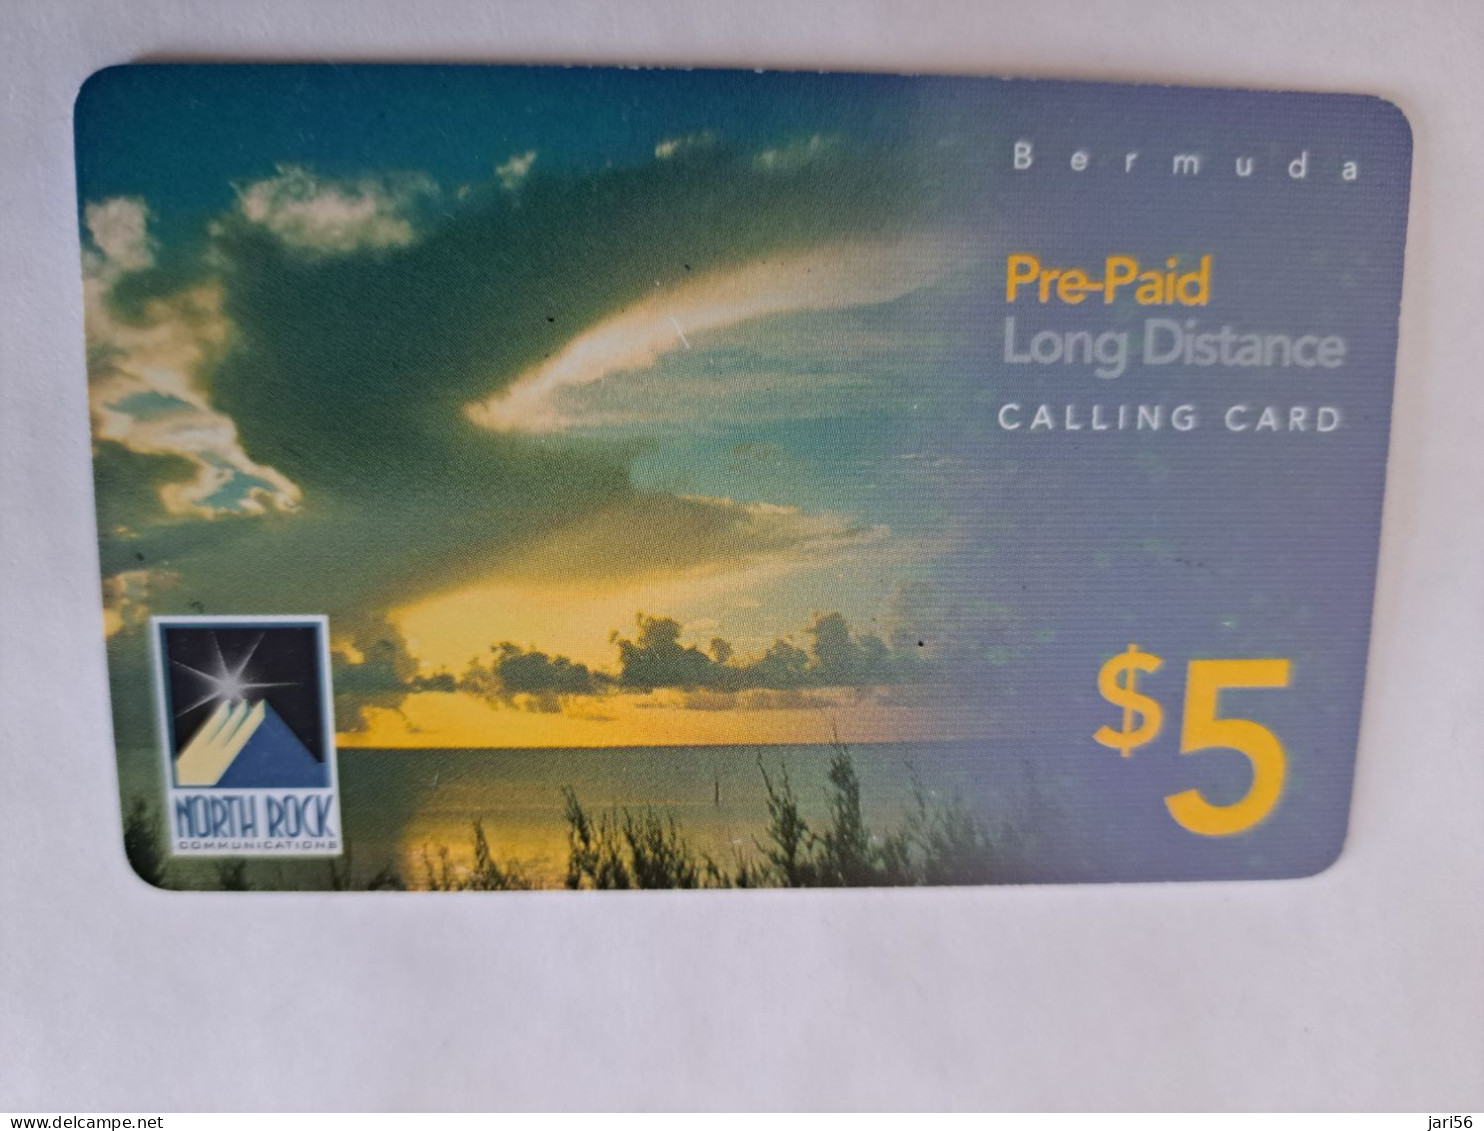 BERMUDA  $5 ,-  BERMUDA  NORTHROCK    SUNSET     3/2005    PREPAID CARD  fine USED  **  14788**